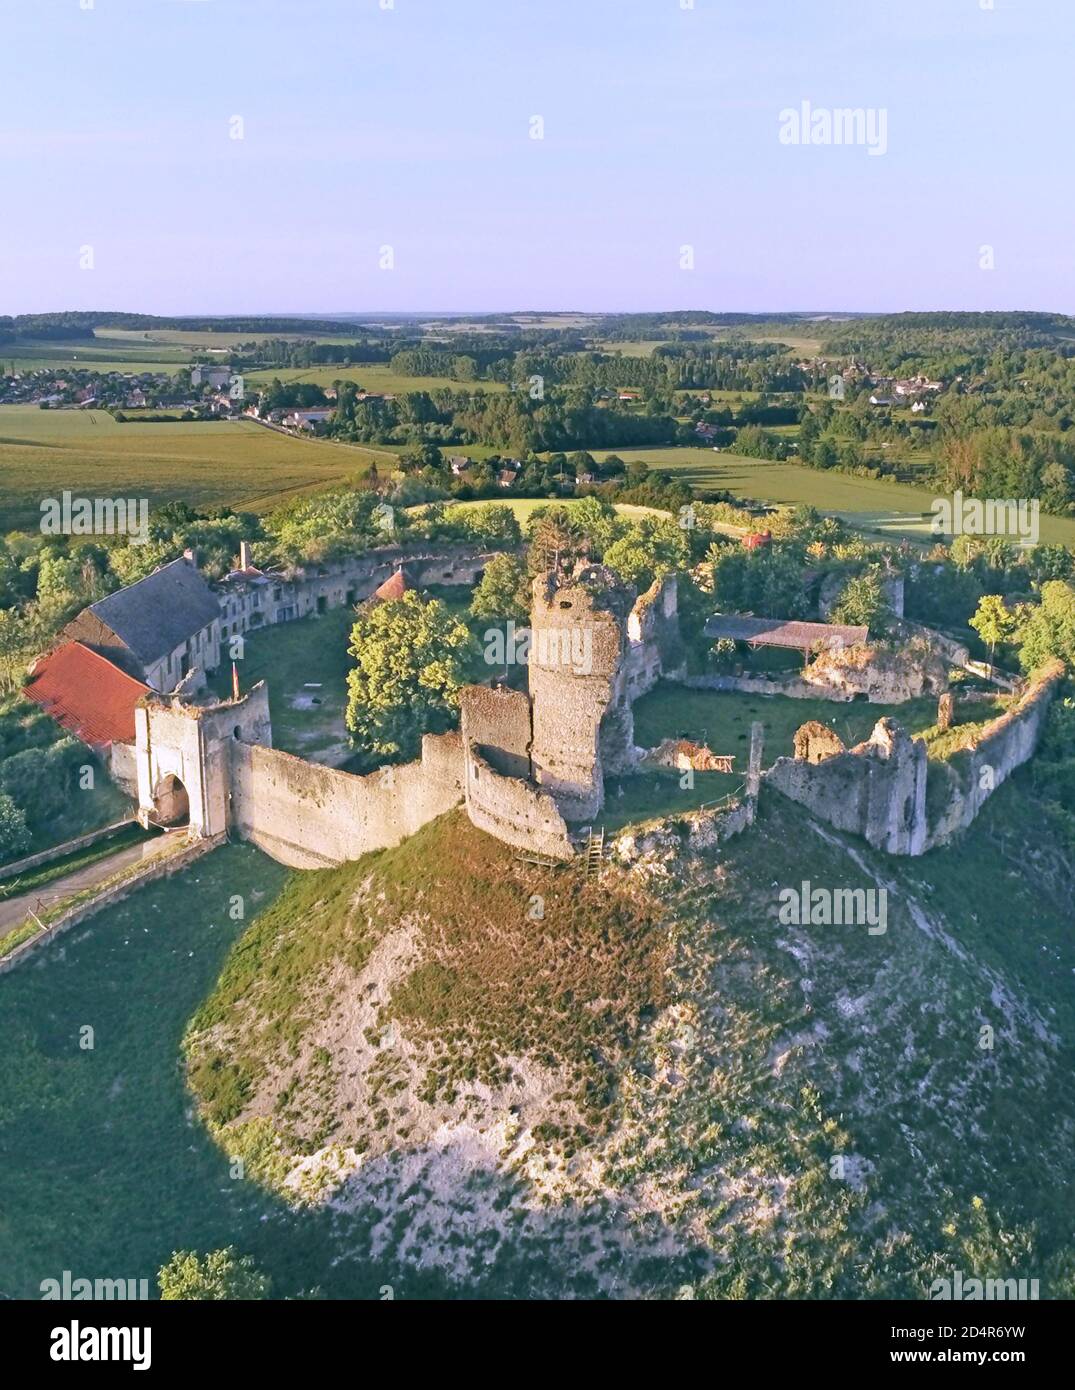 El castillo en ruinas de Châteauneuf-sur-Epte está en el municipio de Château-sur-Epte en el departamento de Eure de Francia (vista aérea) Foto de stock